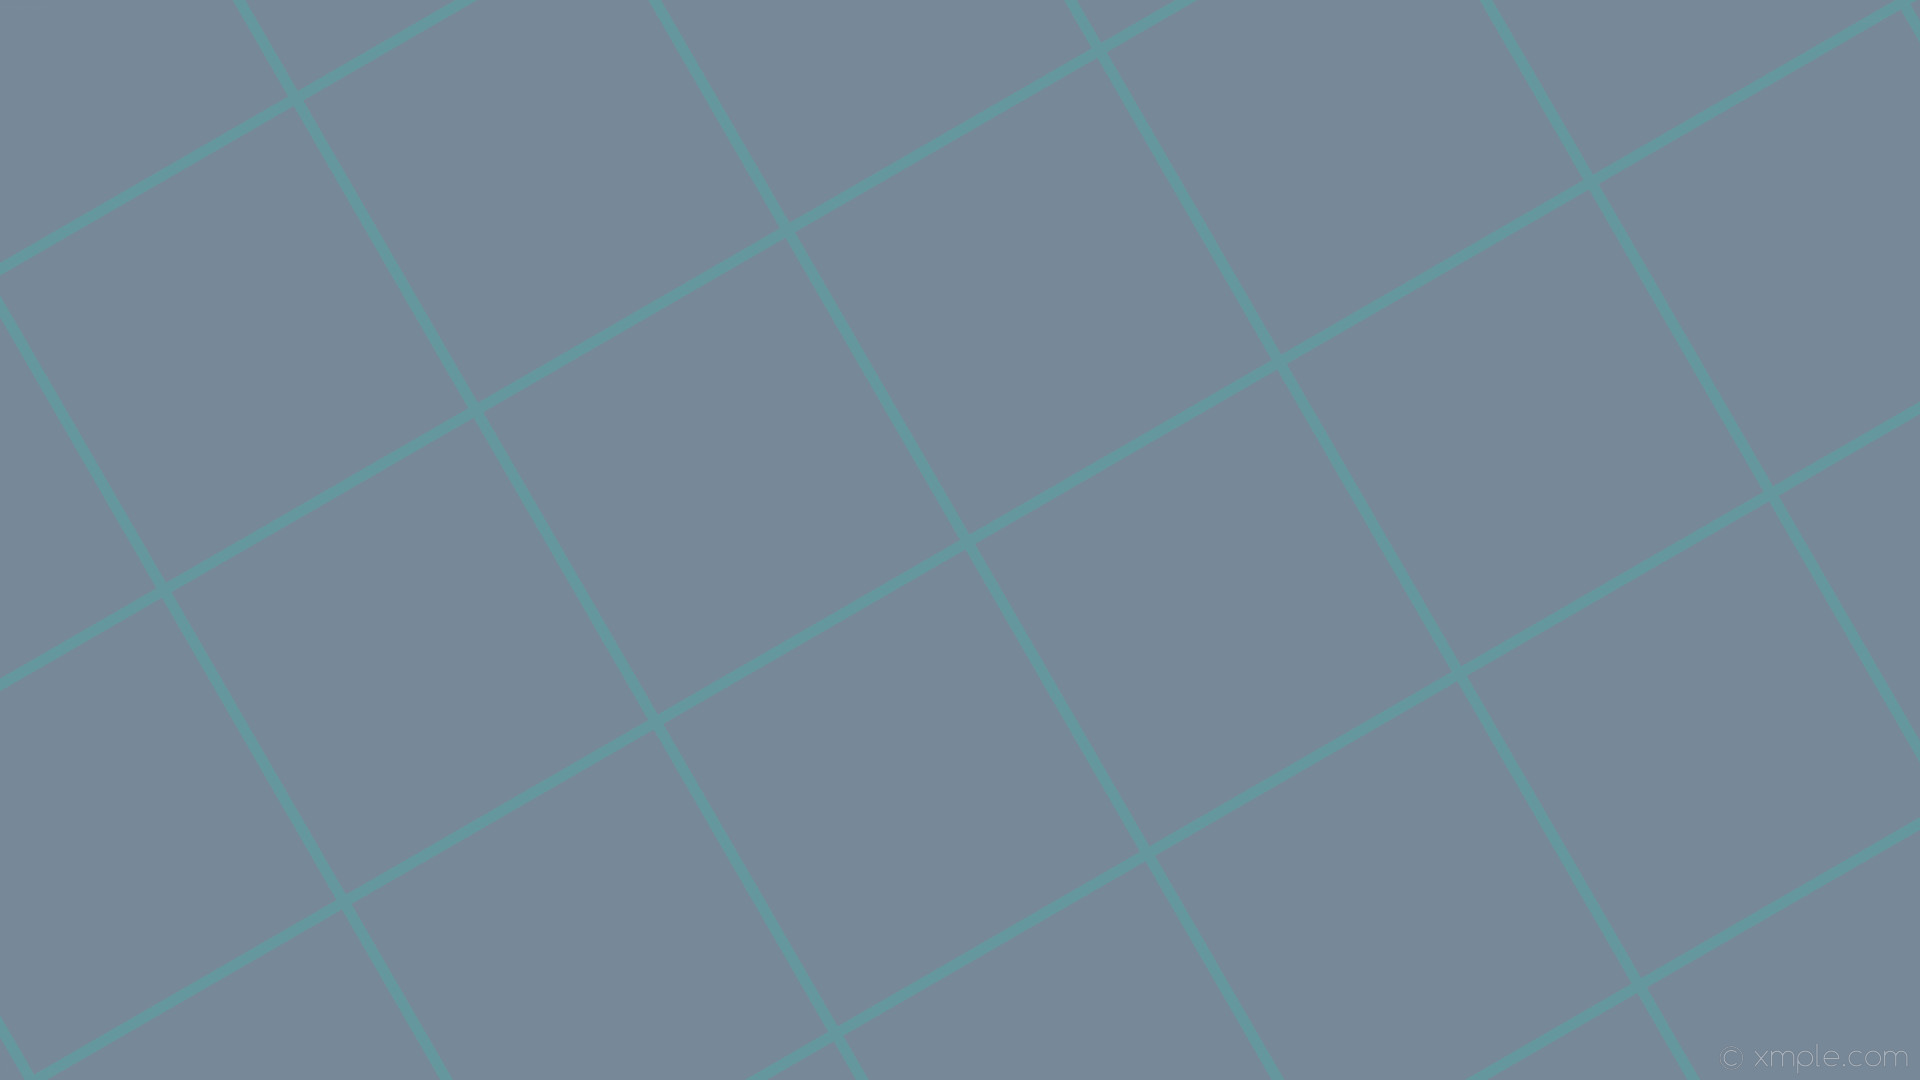 1920x1080 wallpaper blue grid graph paper grey light slate gray cadet blue #778899  #5f9ea0 30